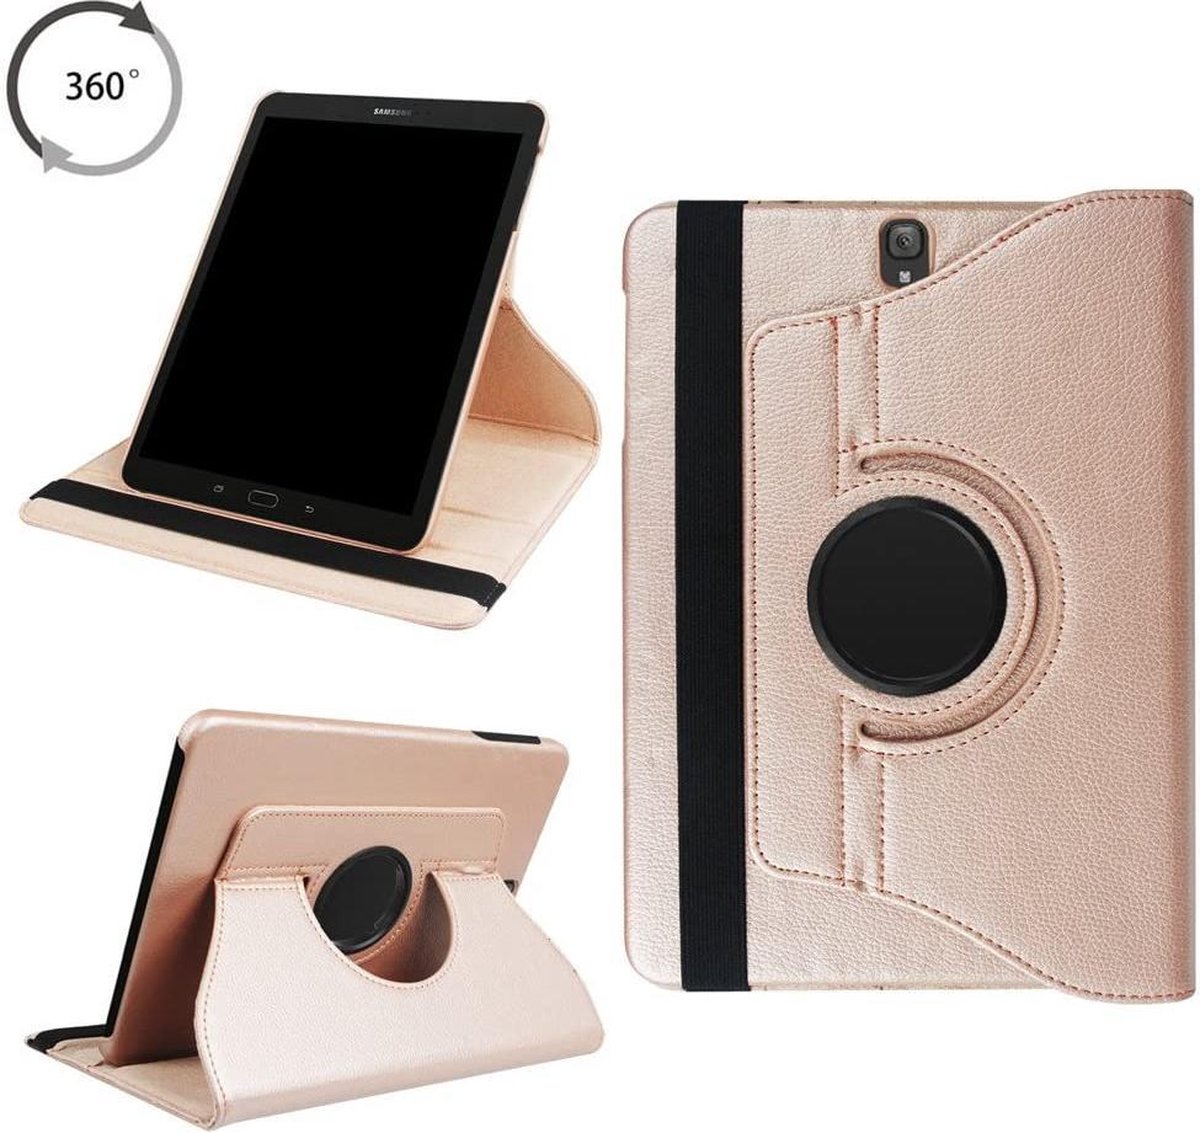 Draaibaar Hoesje - Rotation Tabletcase - Multi stand Case Geschikt voor: Samsung Galaxy Tab A 10.1 inch T580 / T585 (2016 2018) - Rose goud